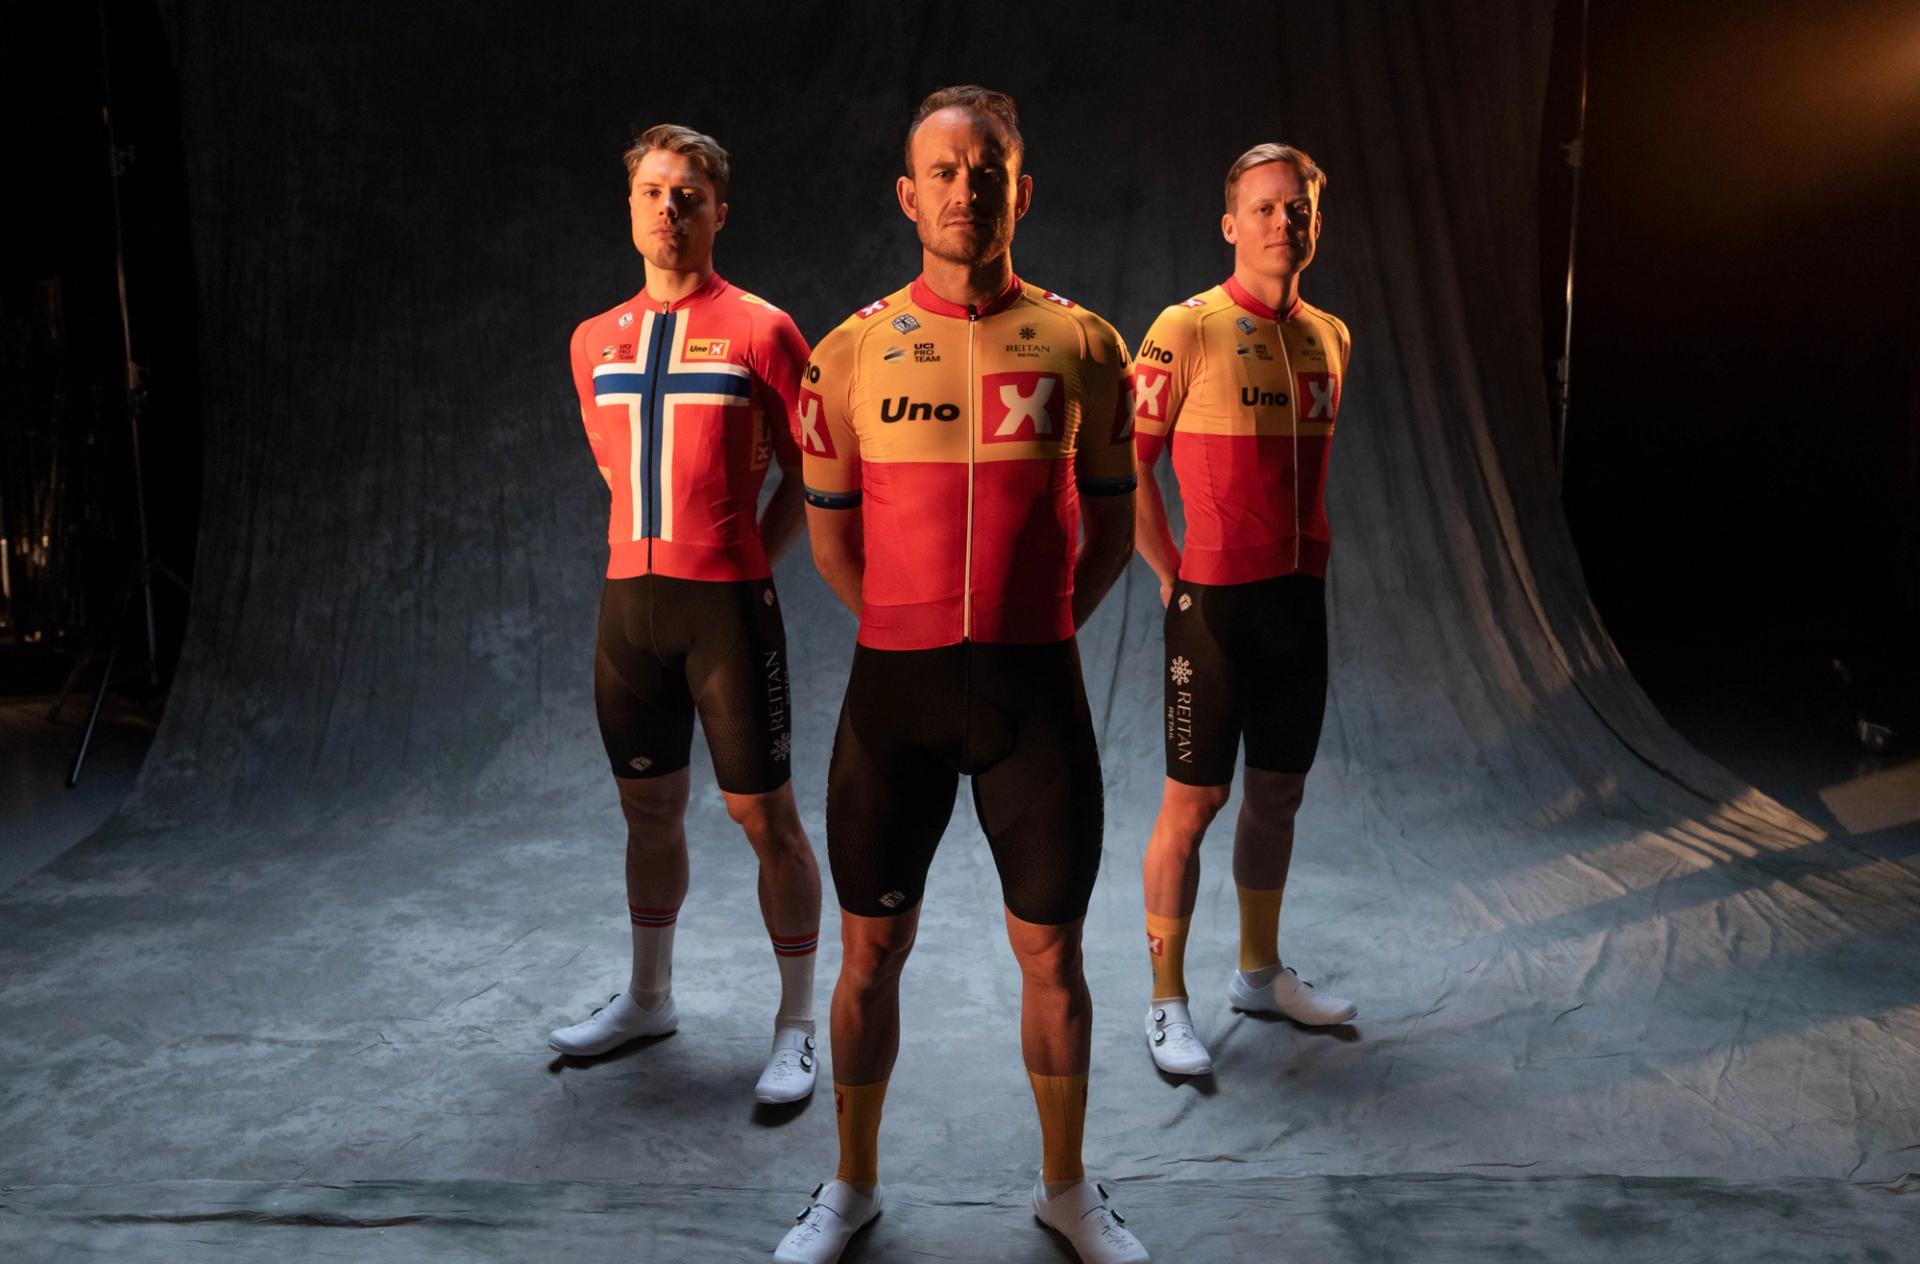 uno x pro cycling team tour 2023